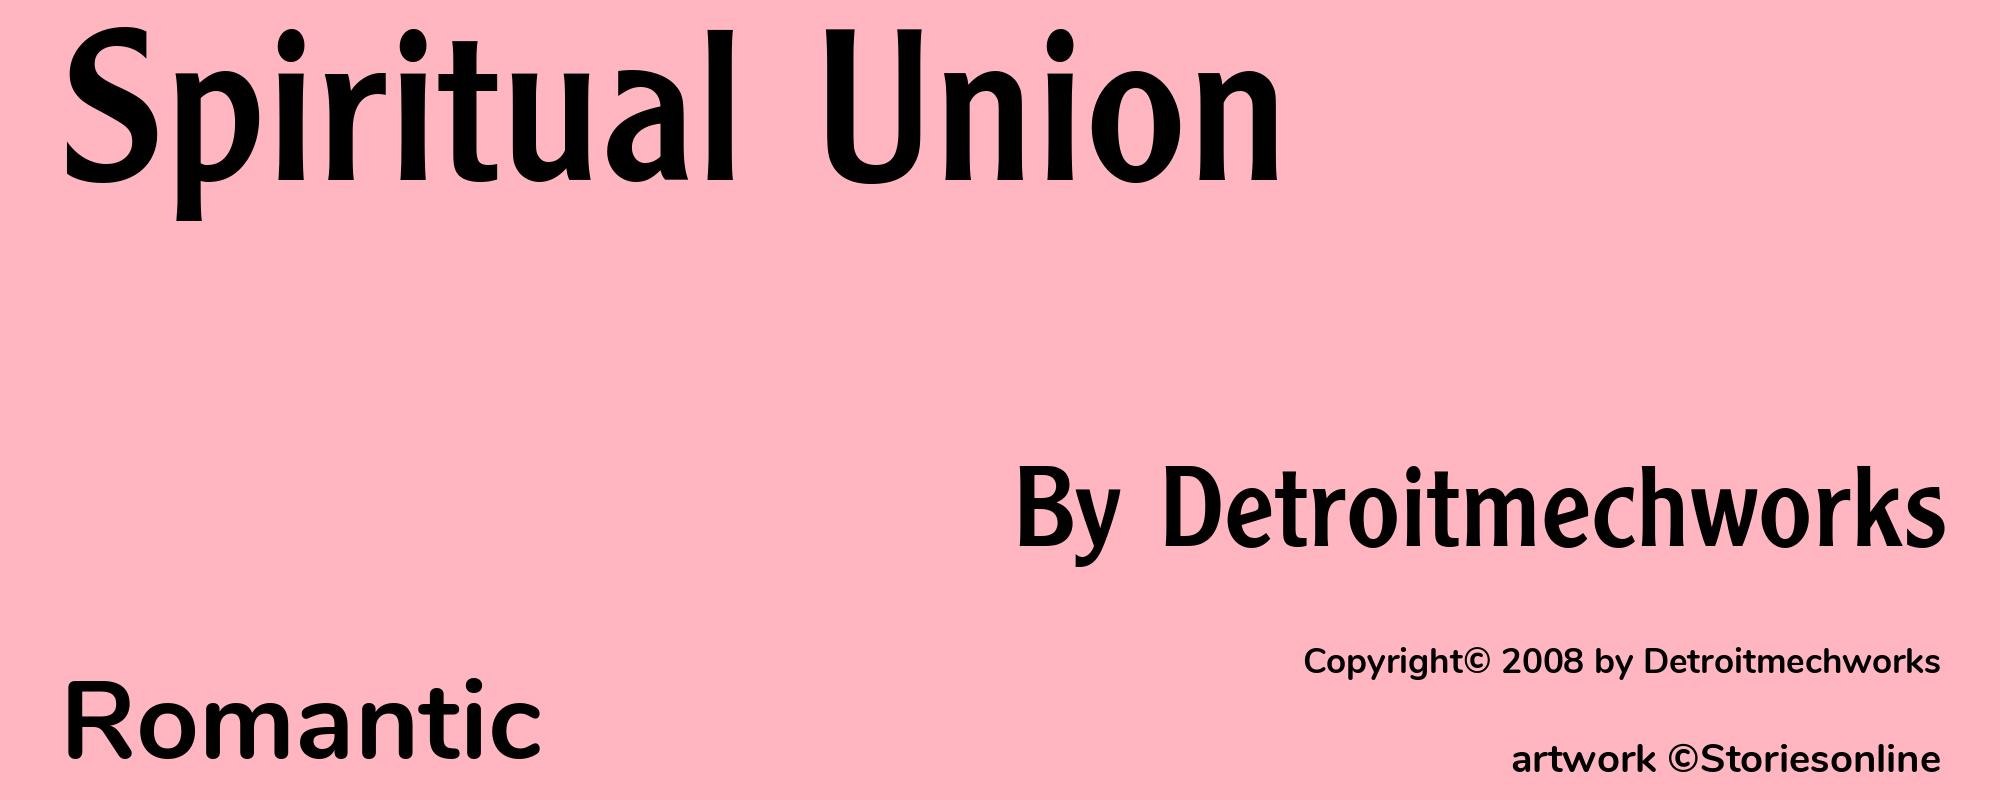 Spiritual Union - Cover